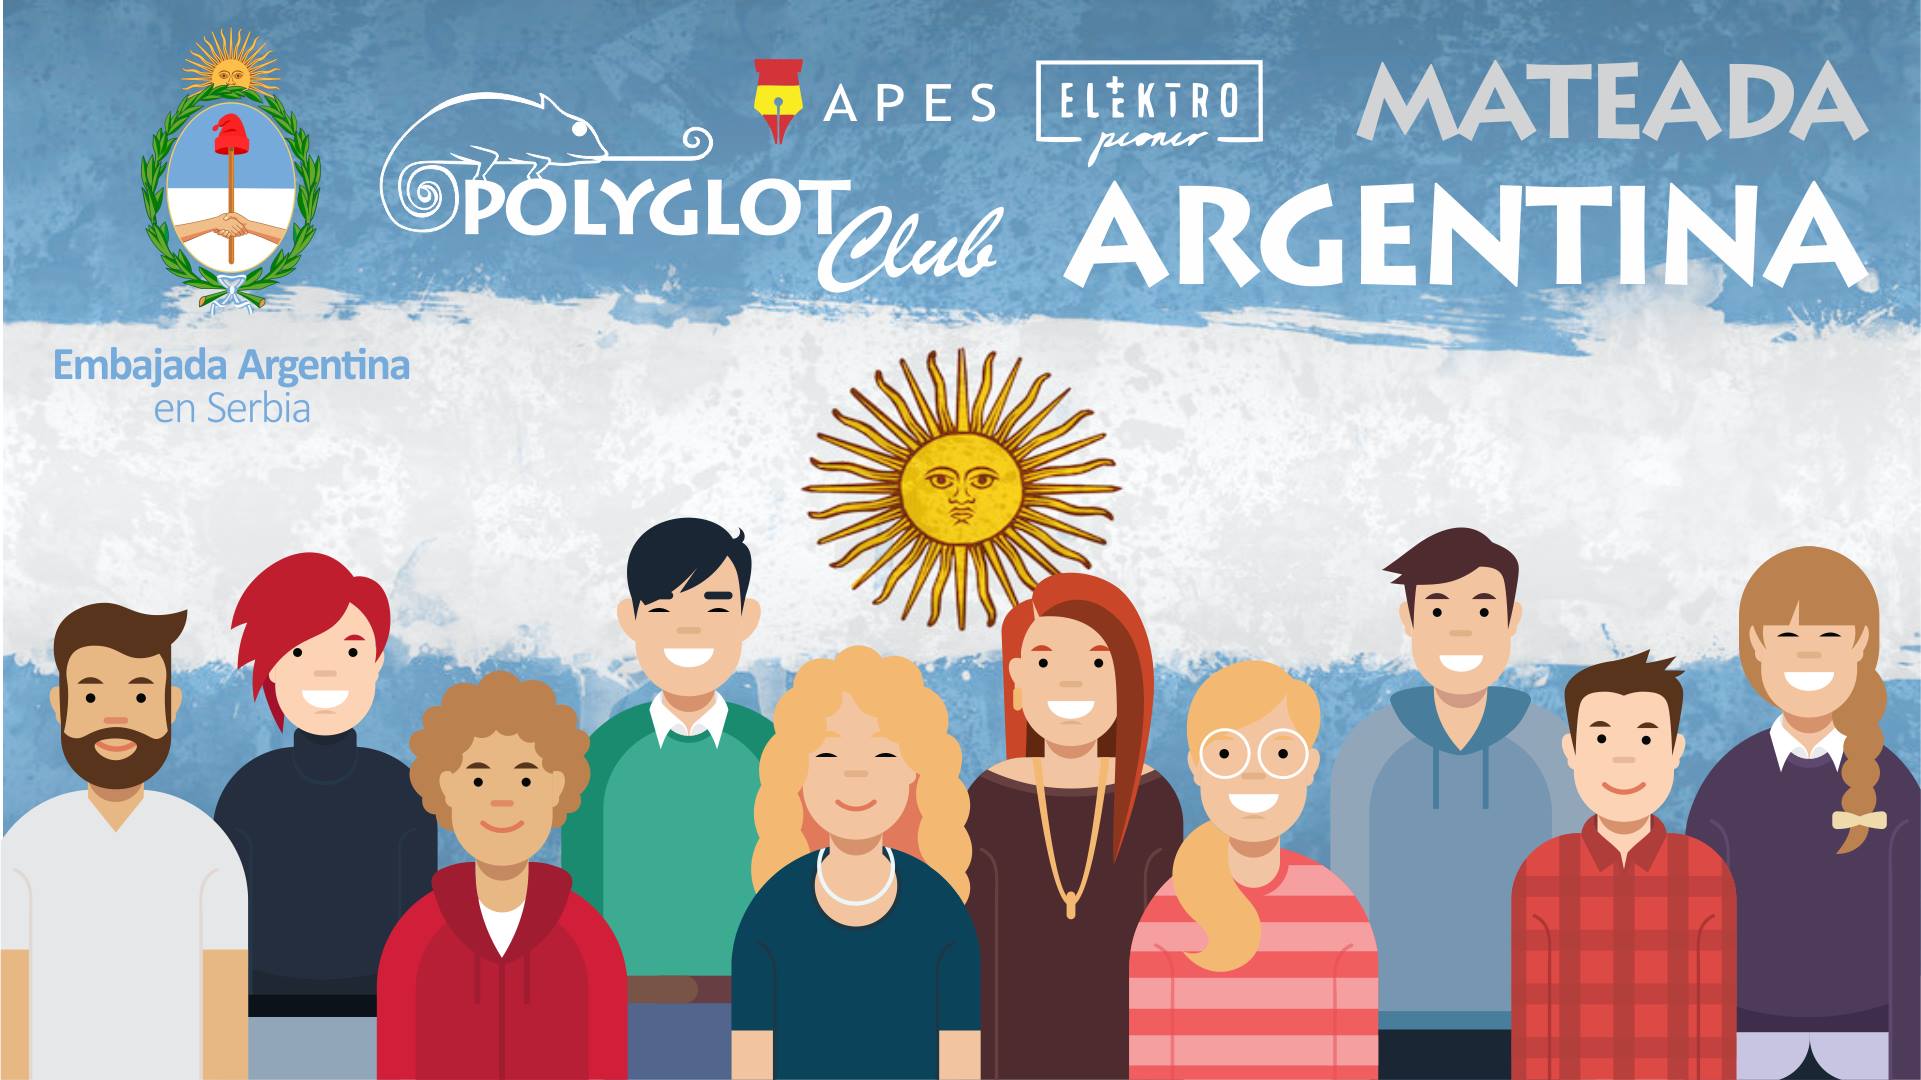 [:en]Polyglot Club Mateada Argentina 04.07.2018. Elektropionir